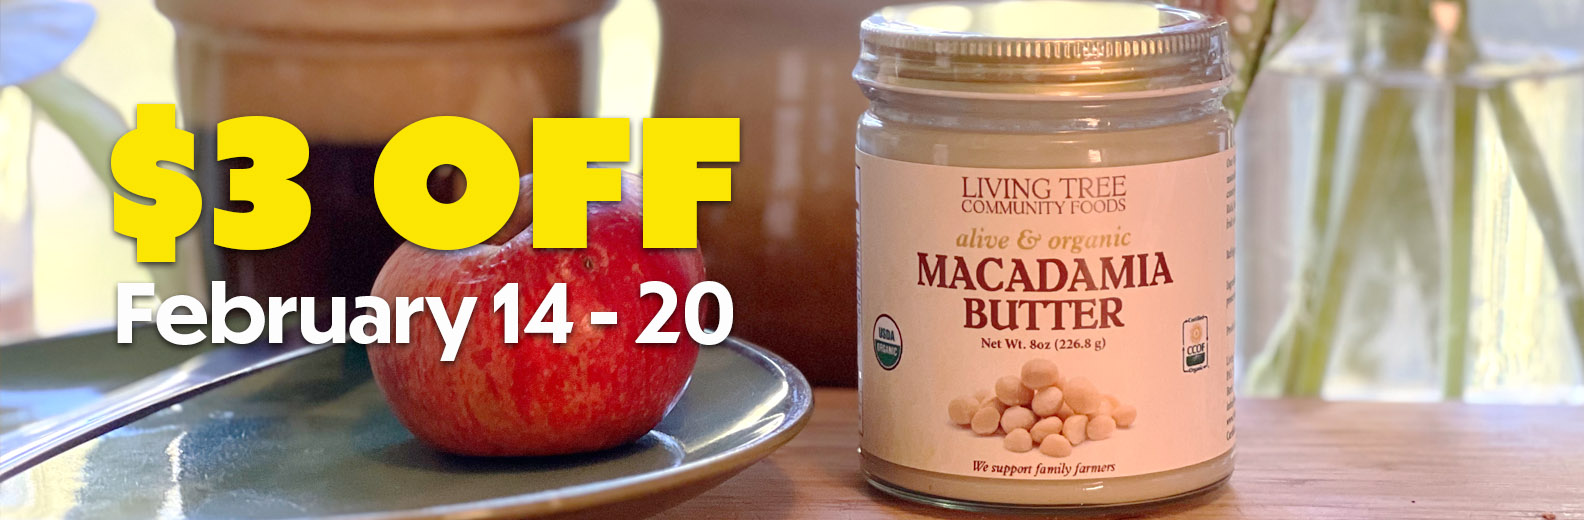 Macadamia Butter Weekly Sale Banner